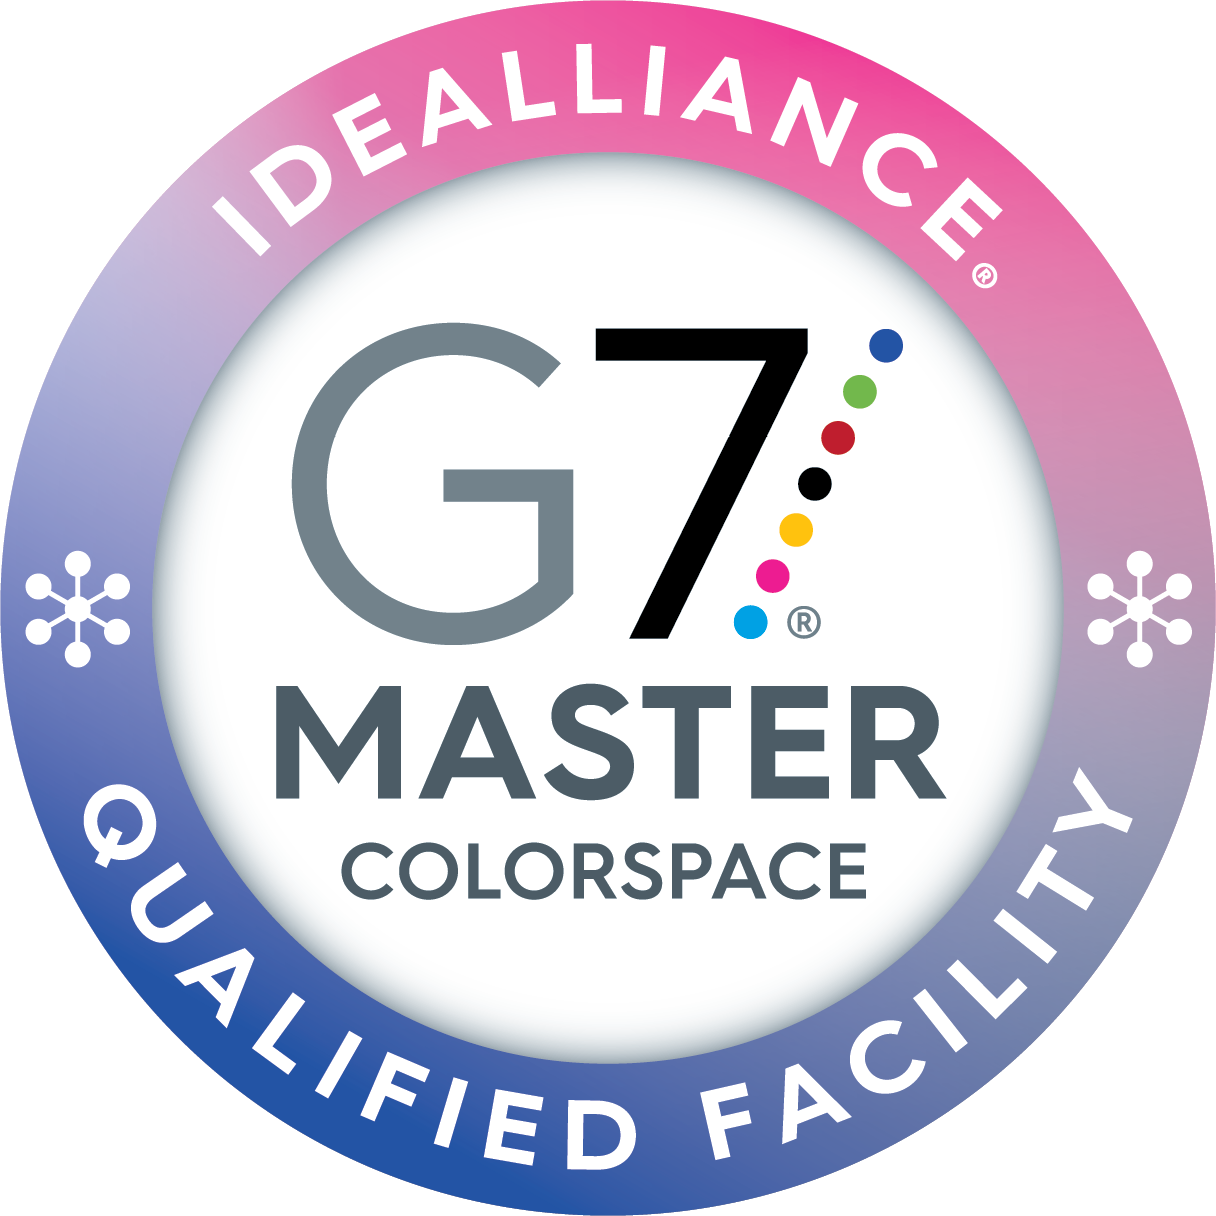 idealliance_certbadge_G7mastercolorspace_qf